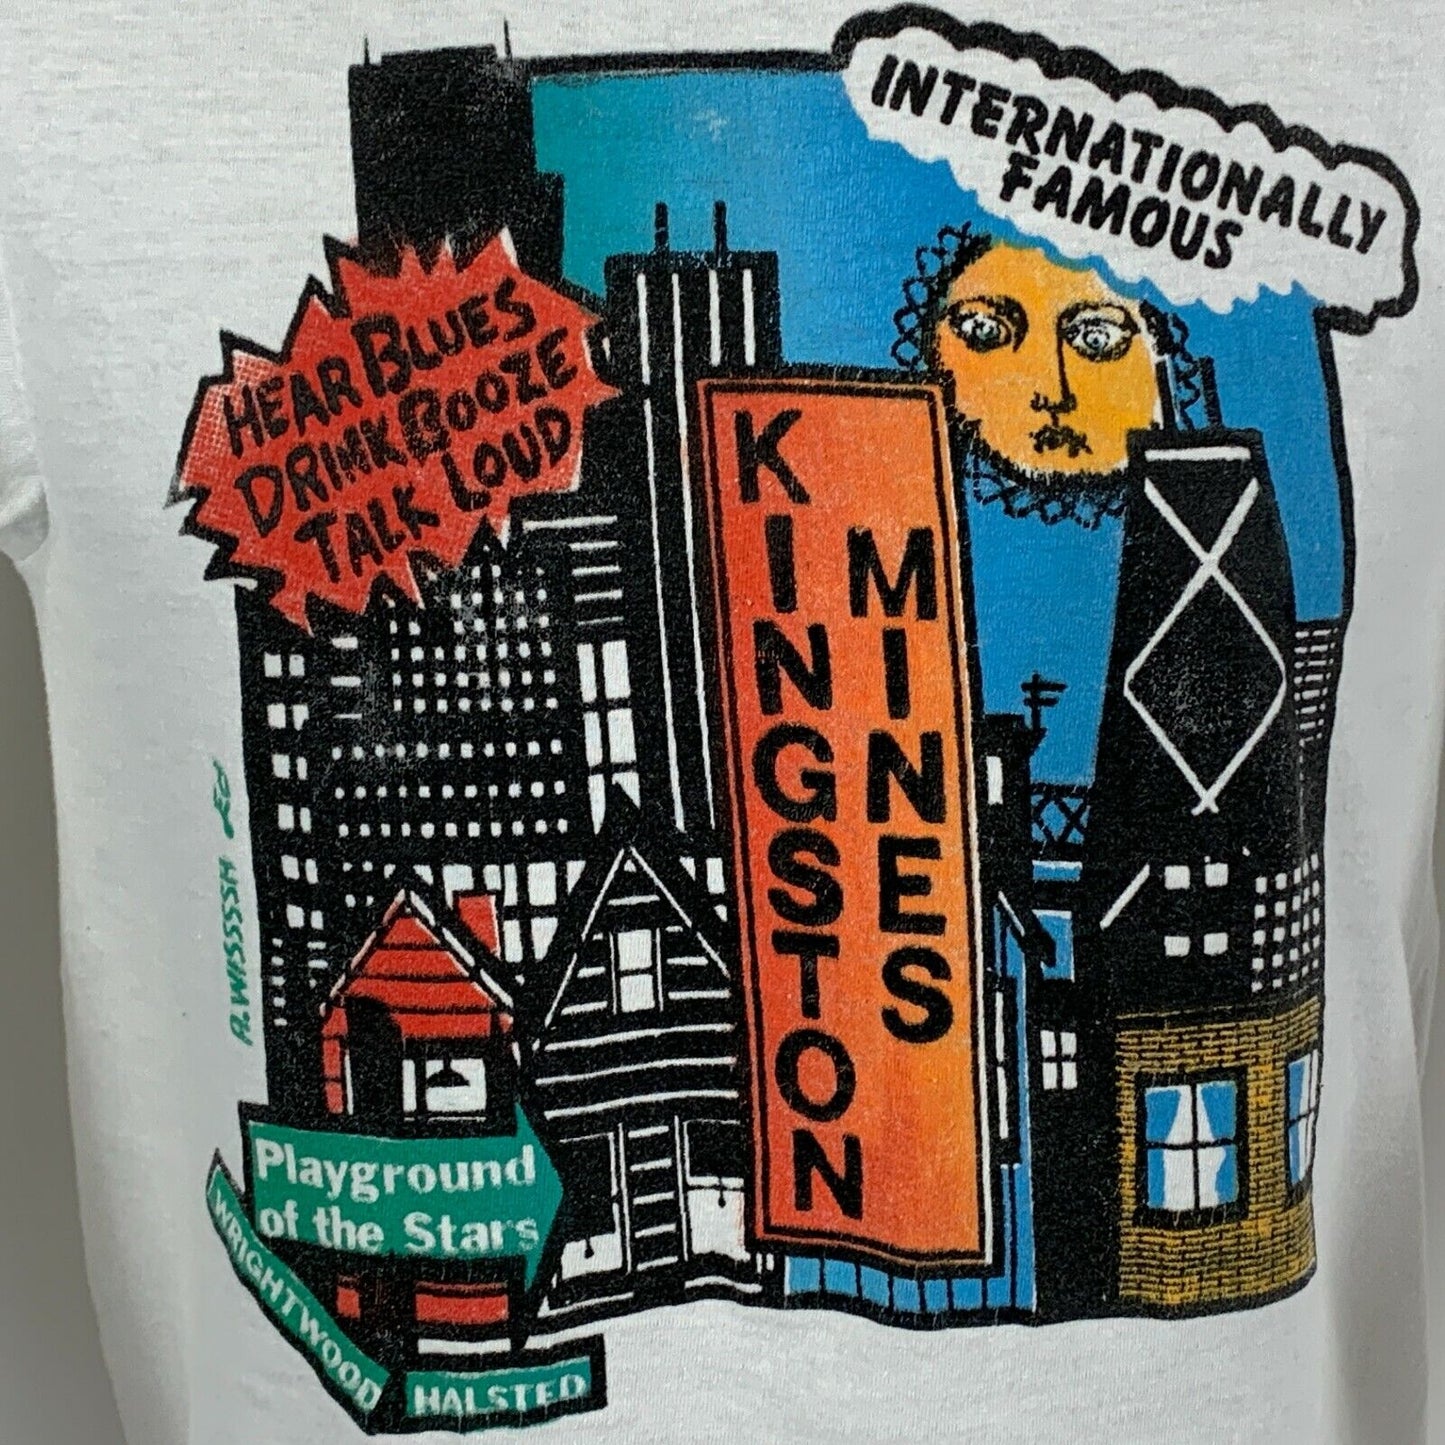 Kingston Mines Chicago Blues Center Vintage 80s T Shirt XS X-Small LS Mens White